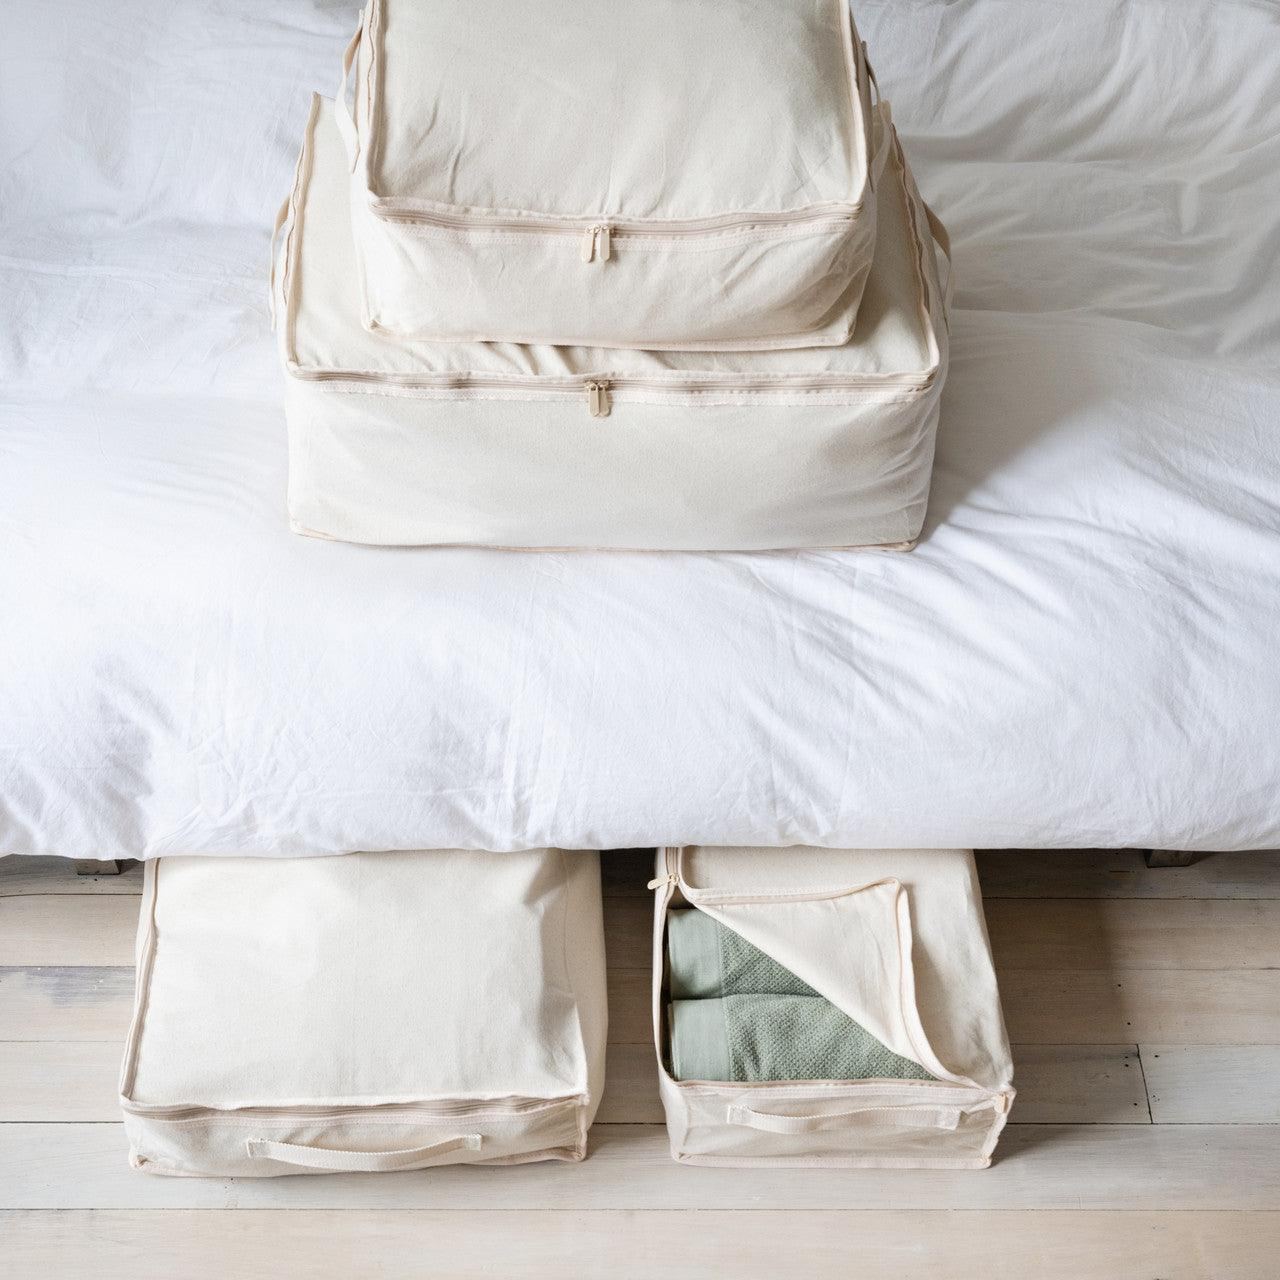 Cotton Storage Bags - 10oz Thick Pure Cotton Fabric  - 8 Pack - (Small X 2 + Medium X 2 + Large X 2 + X-Large X 2) - Hangersforless